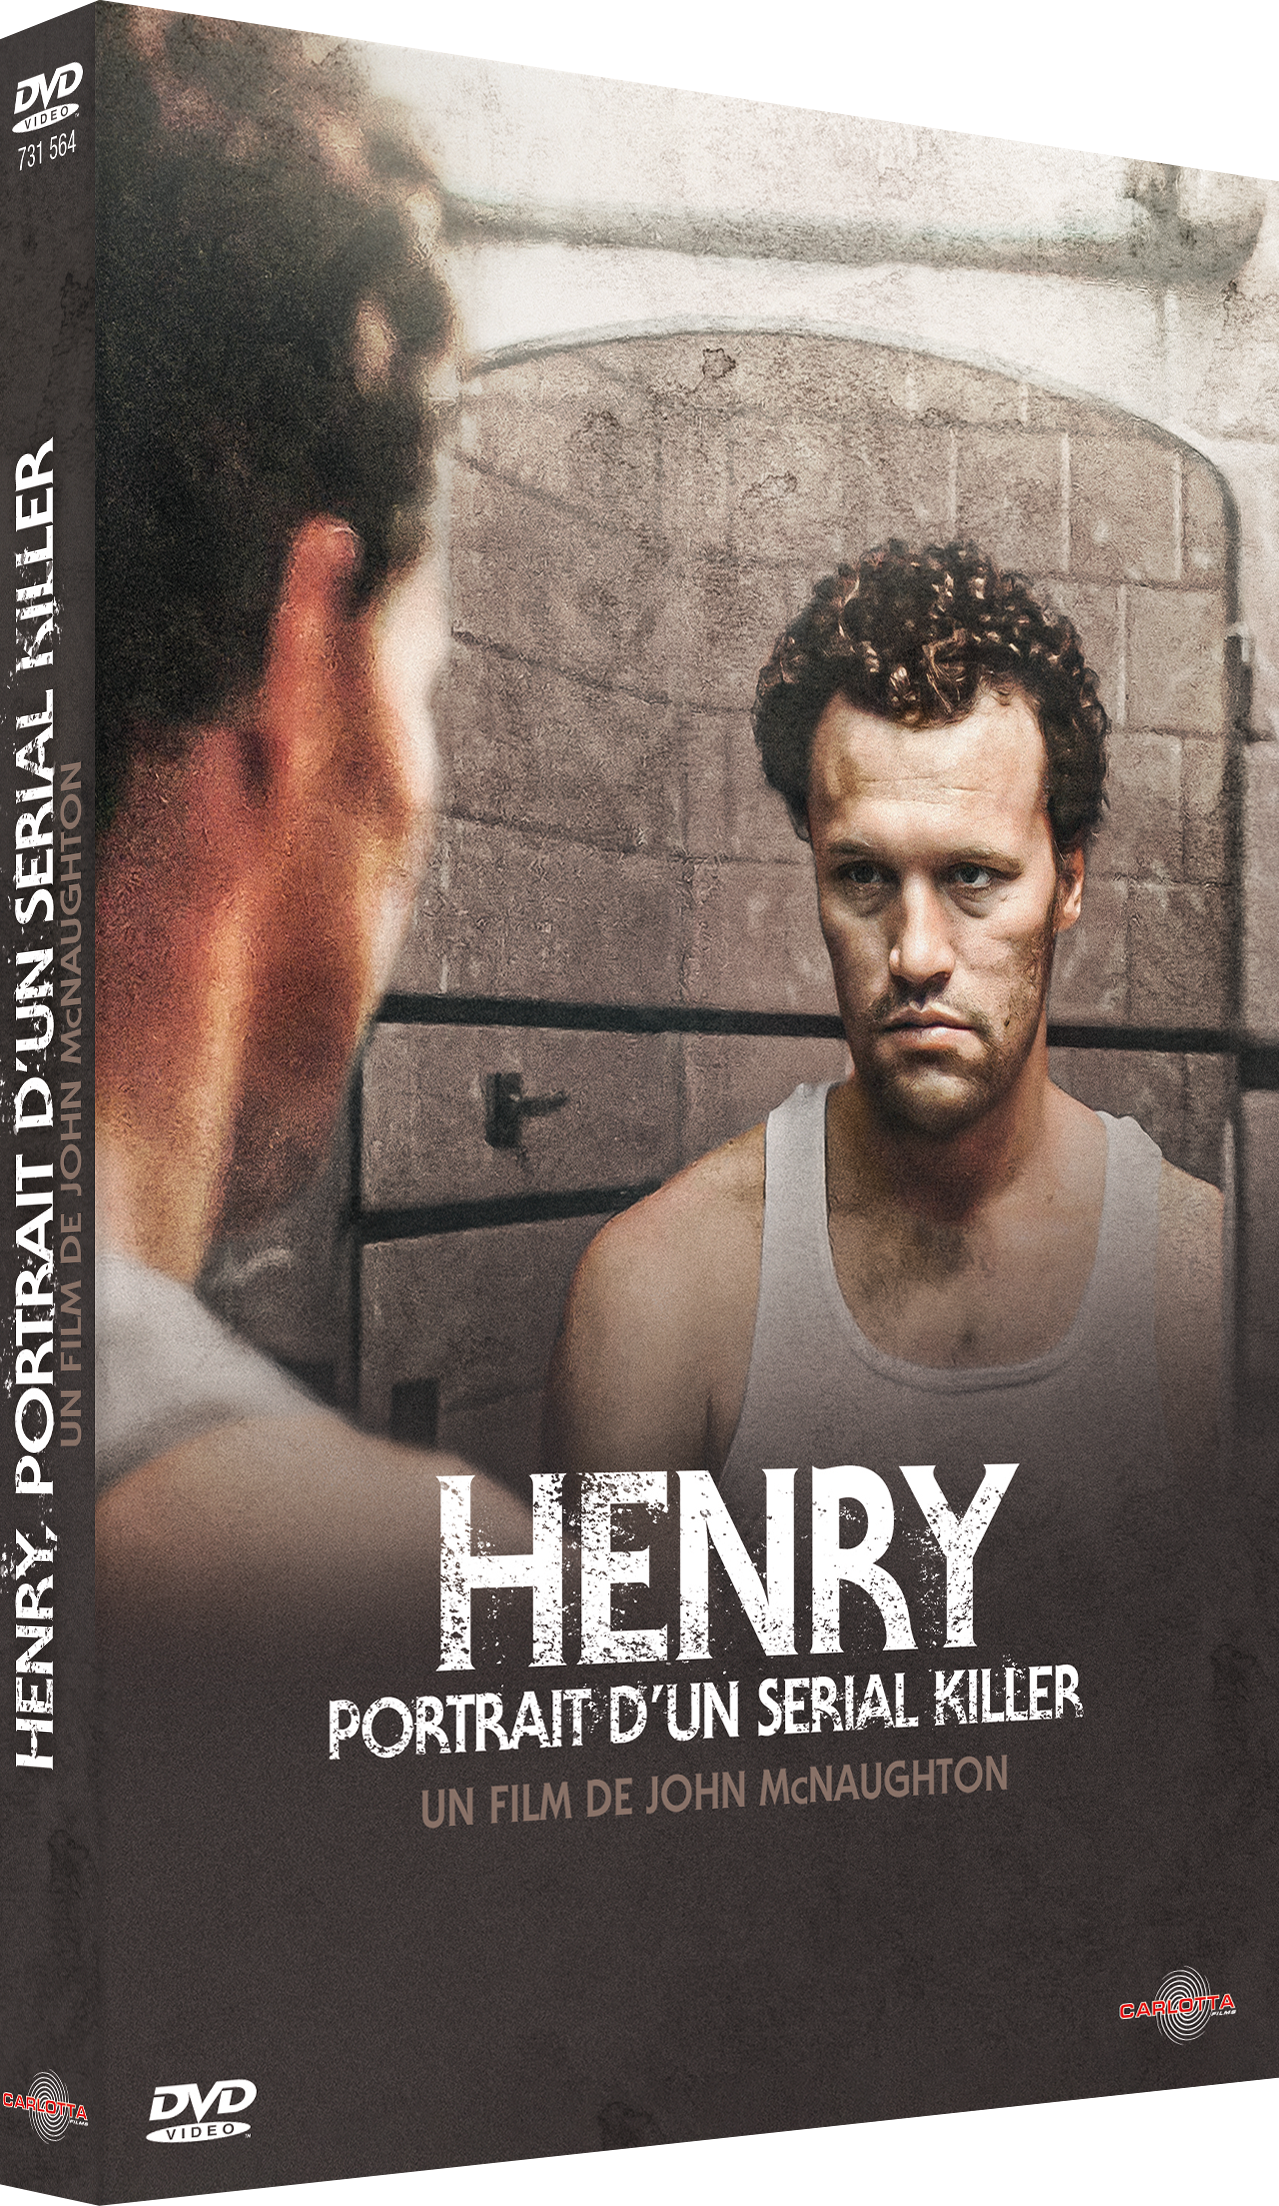 Henry, Portrait of a Serial Killer by John McNaughton